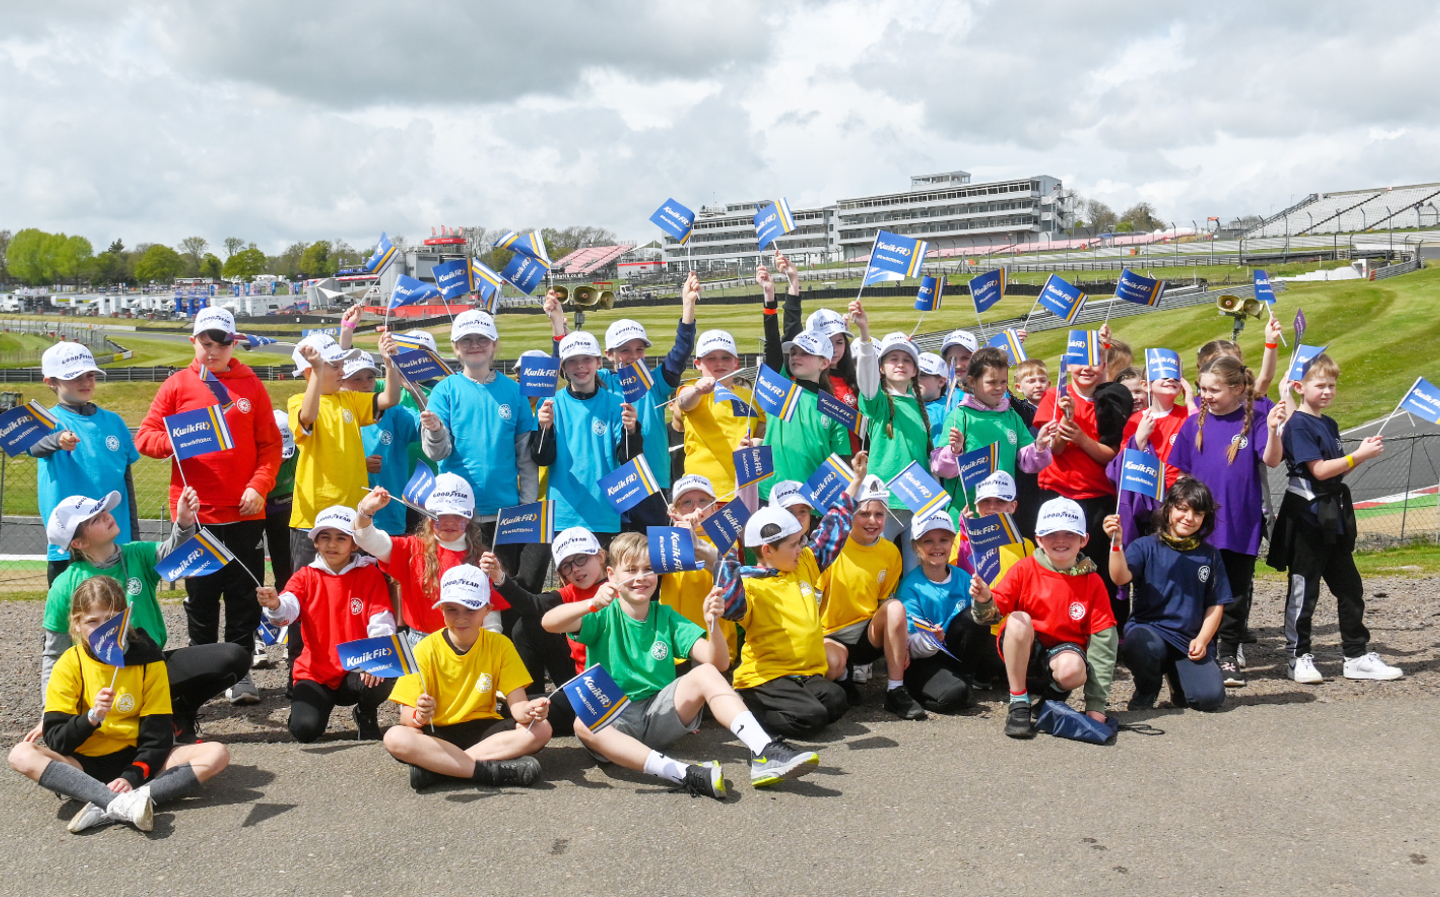 Kids in Motorsport at Brands Hatch